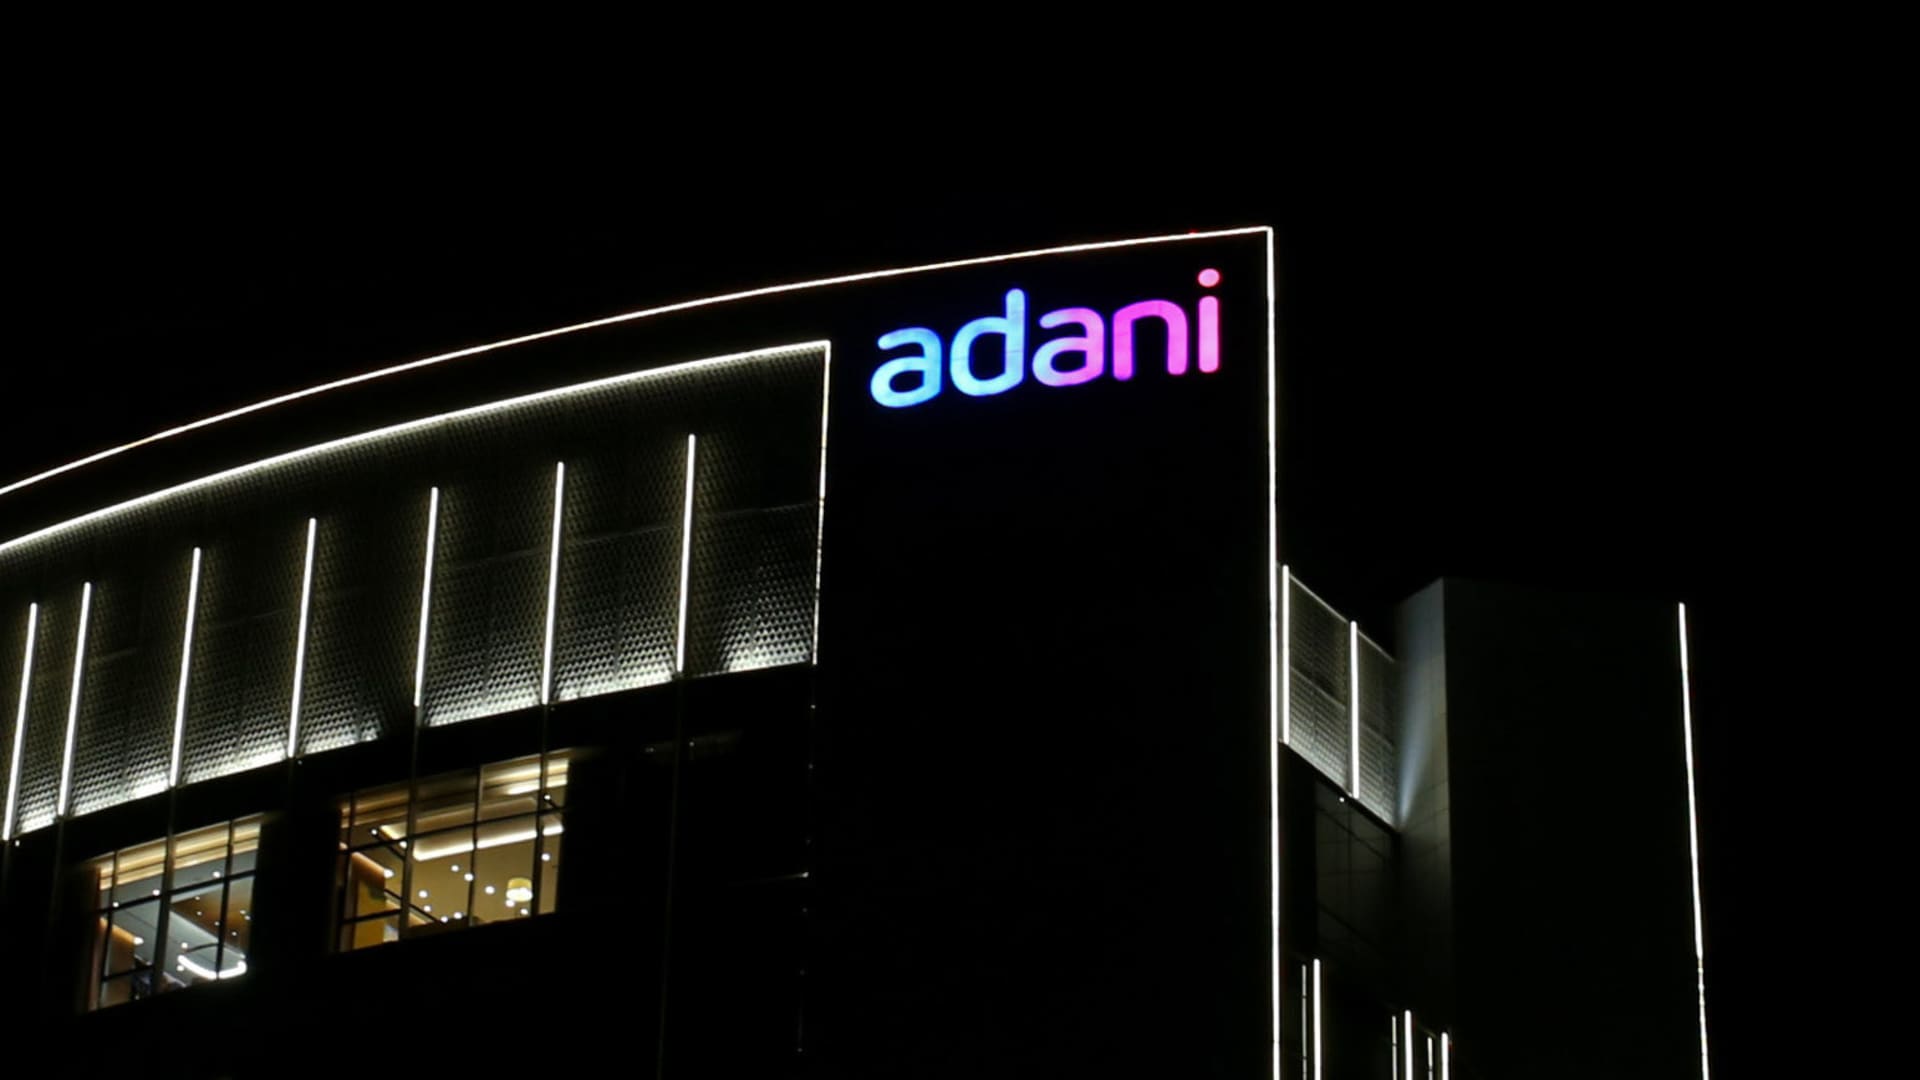 S&P Dow Jones is knocking Adani Enterprises off its sustainability index